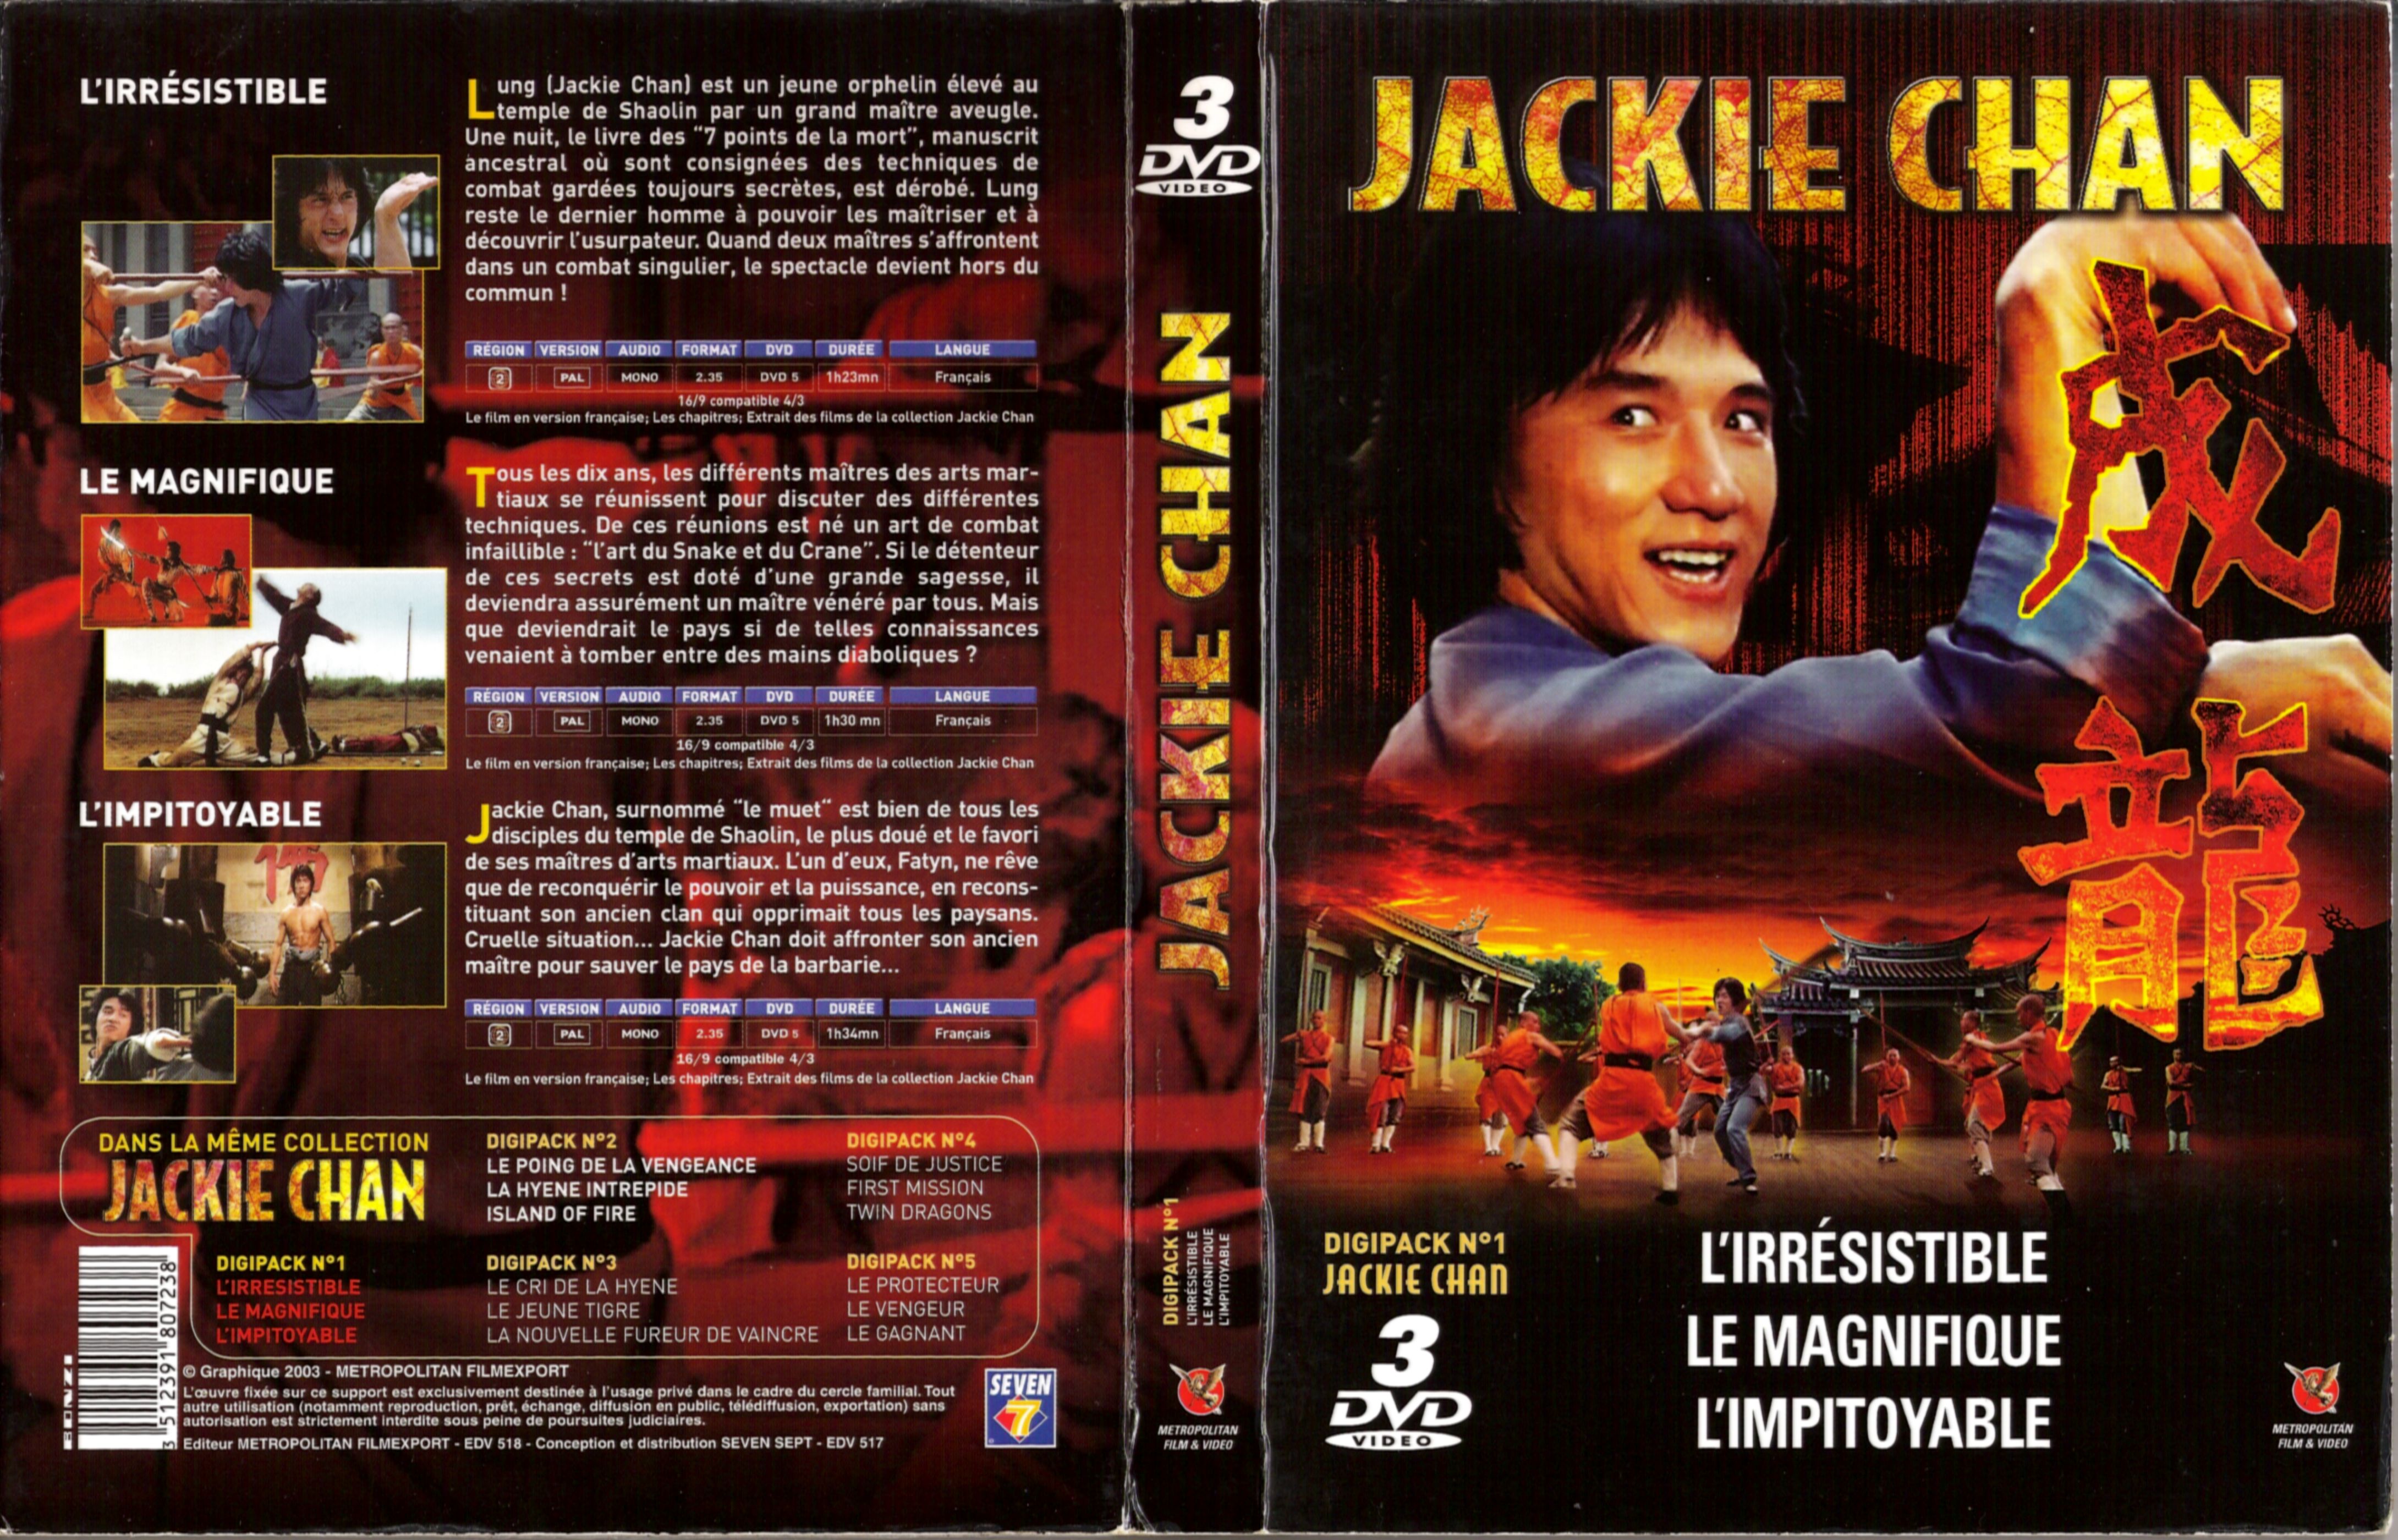 Jaquette DVD Jackie Chan digipack 1